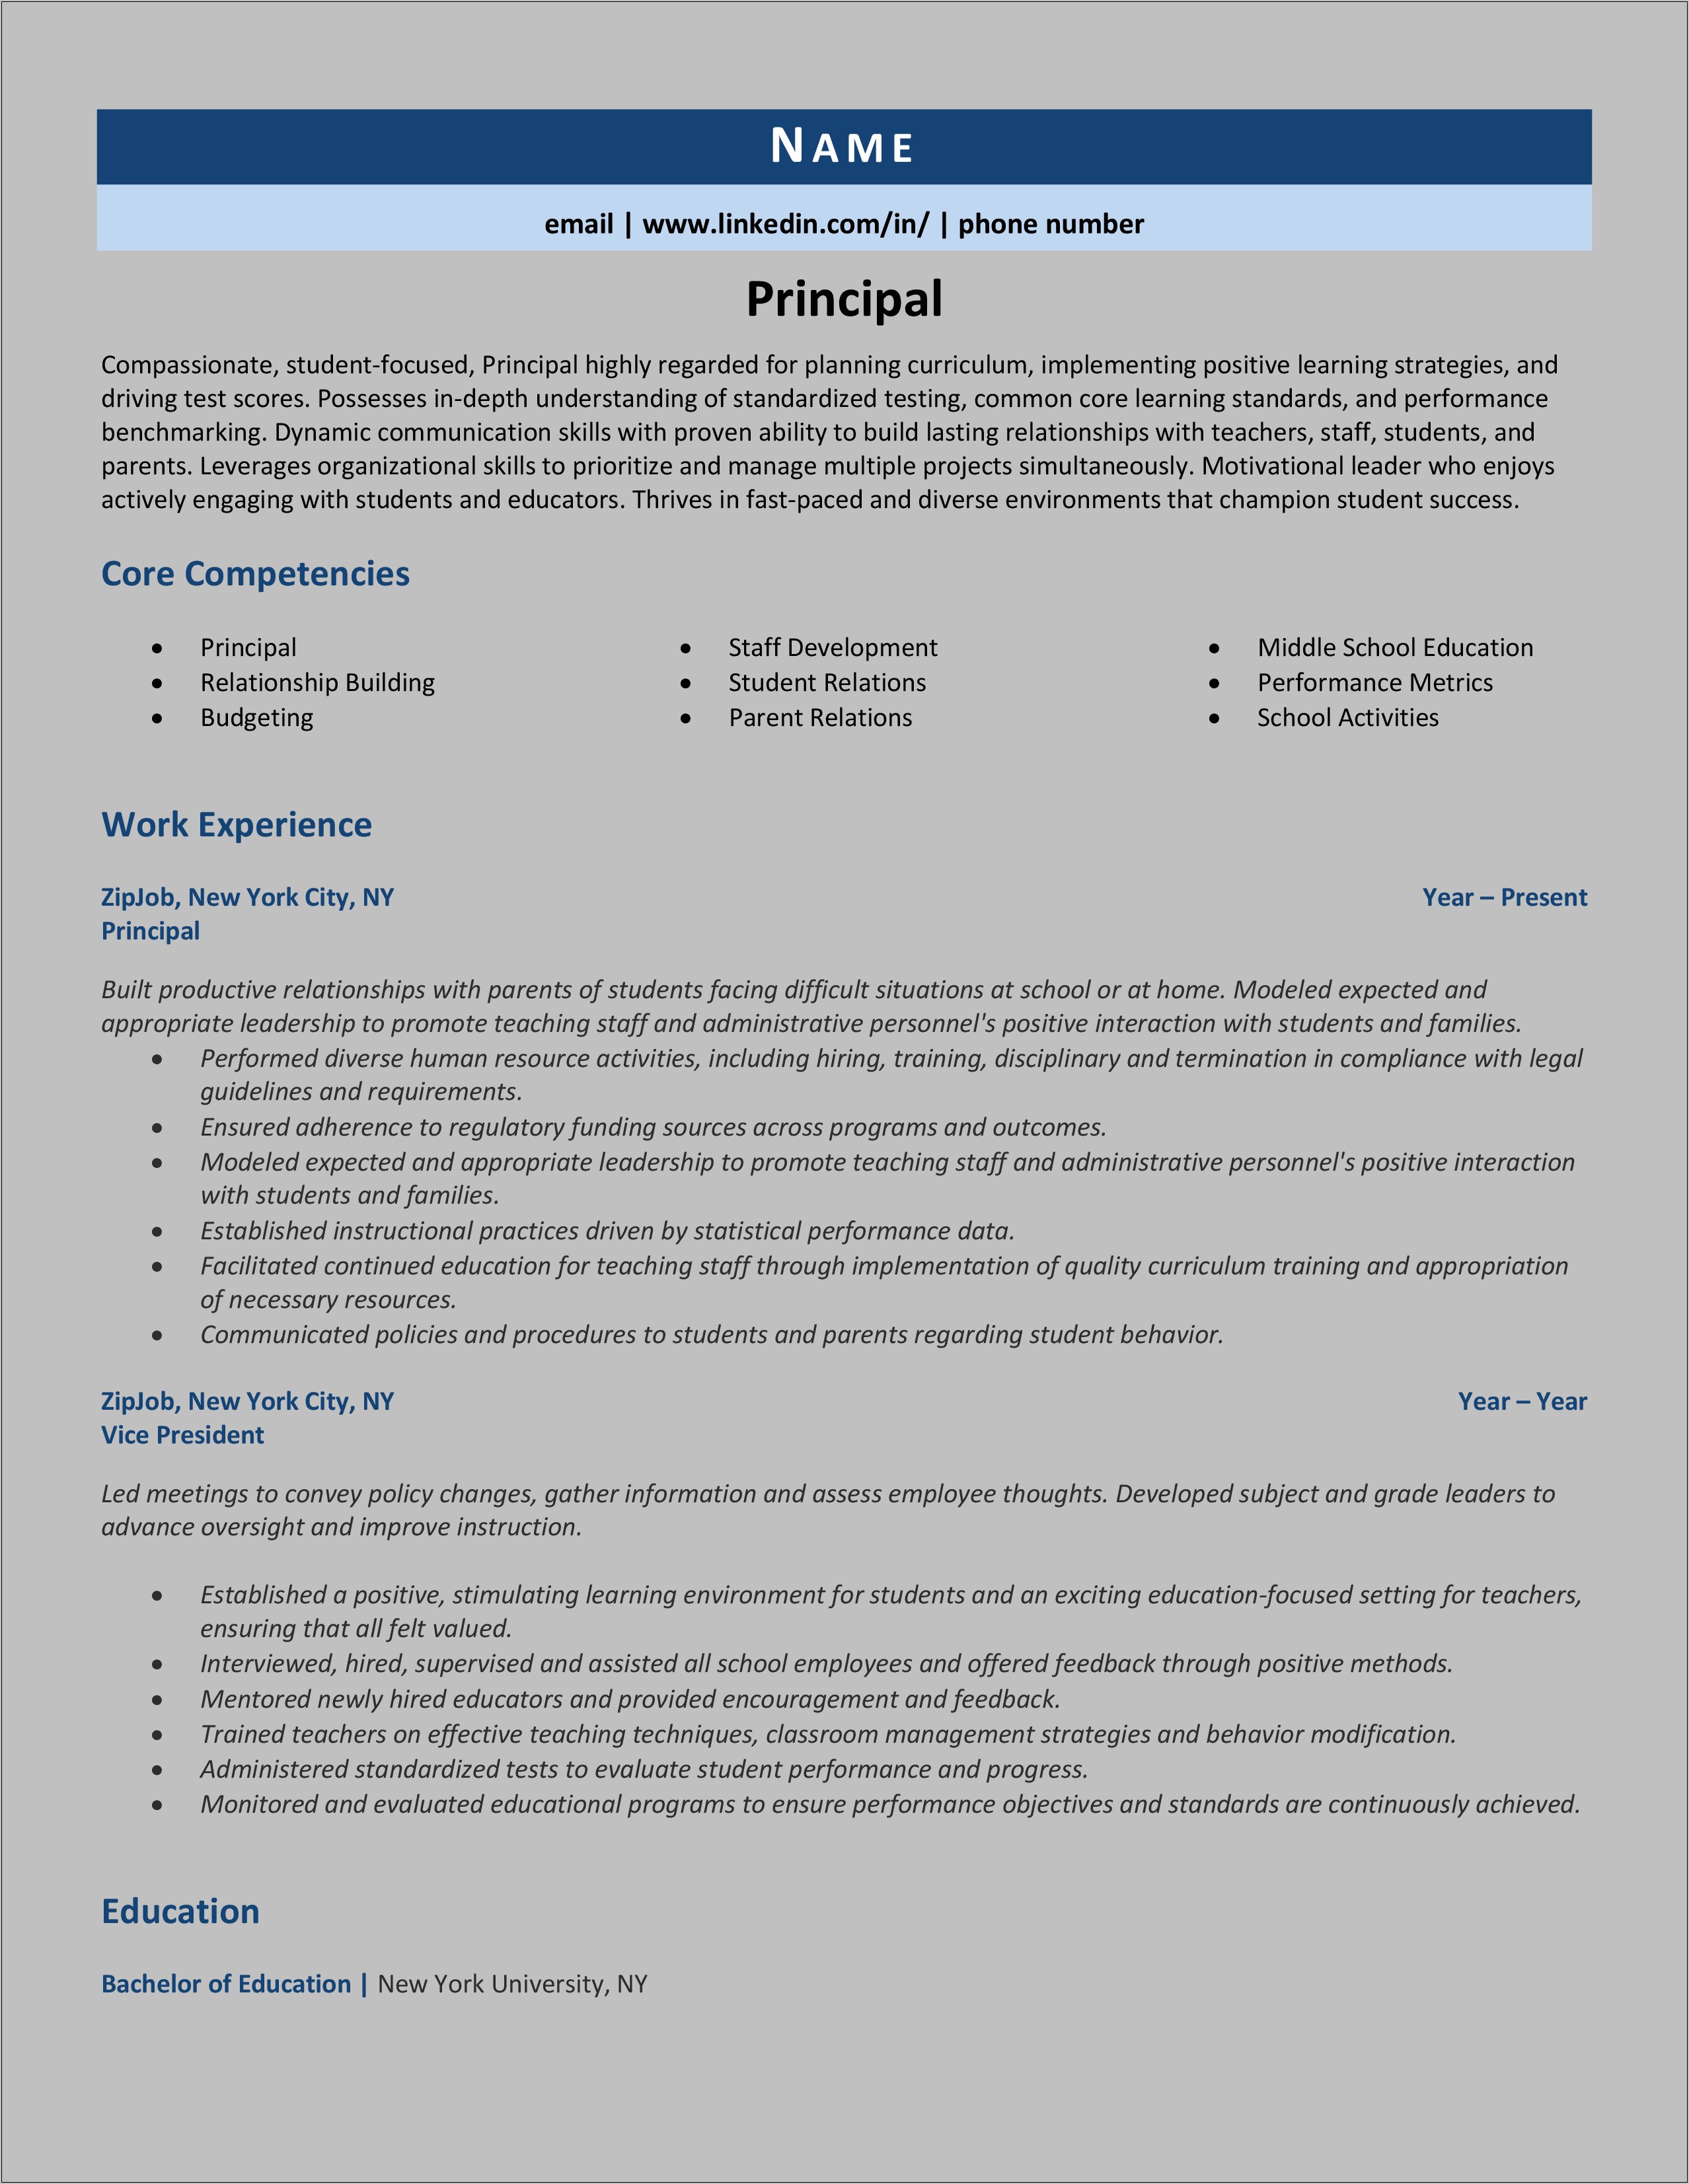 Sample Resume Job Summary For A School Principal